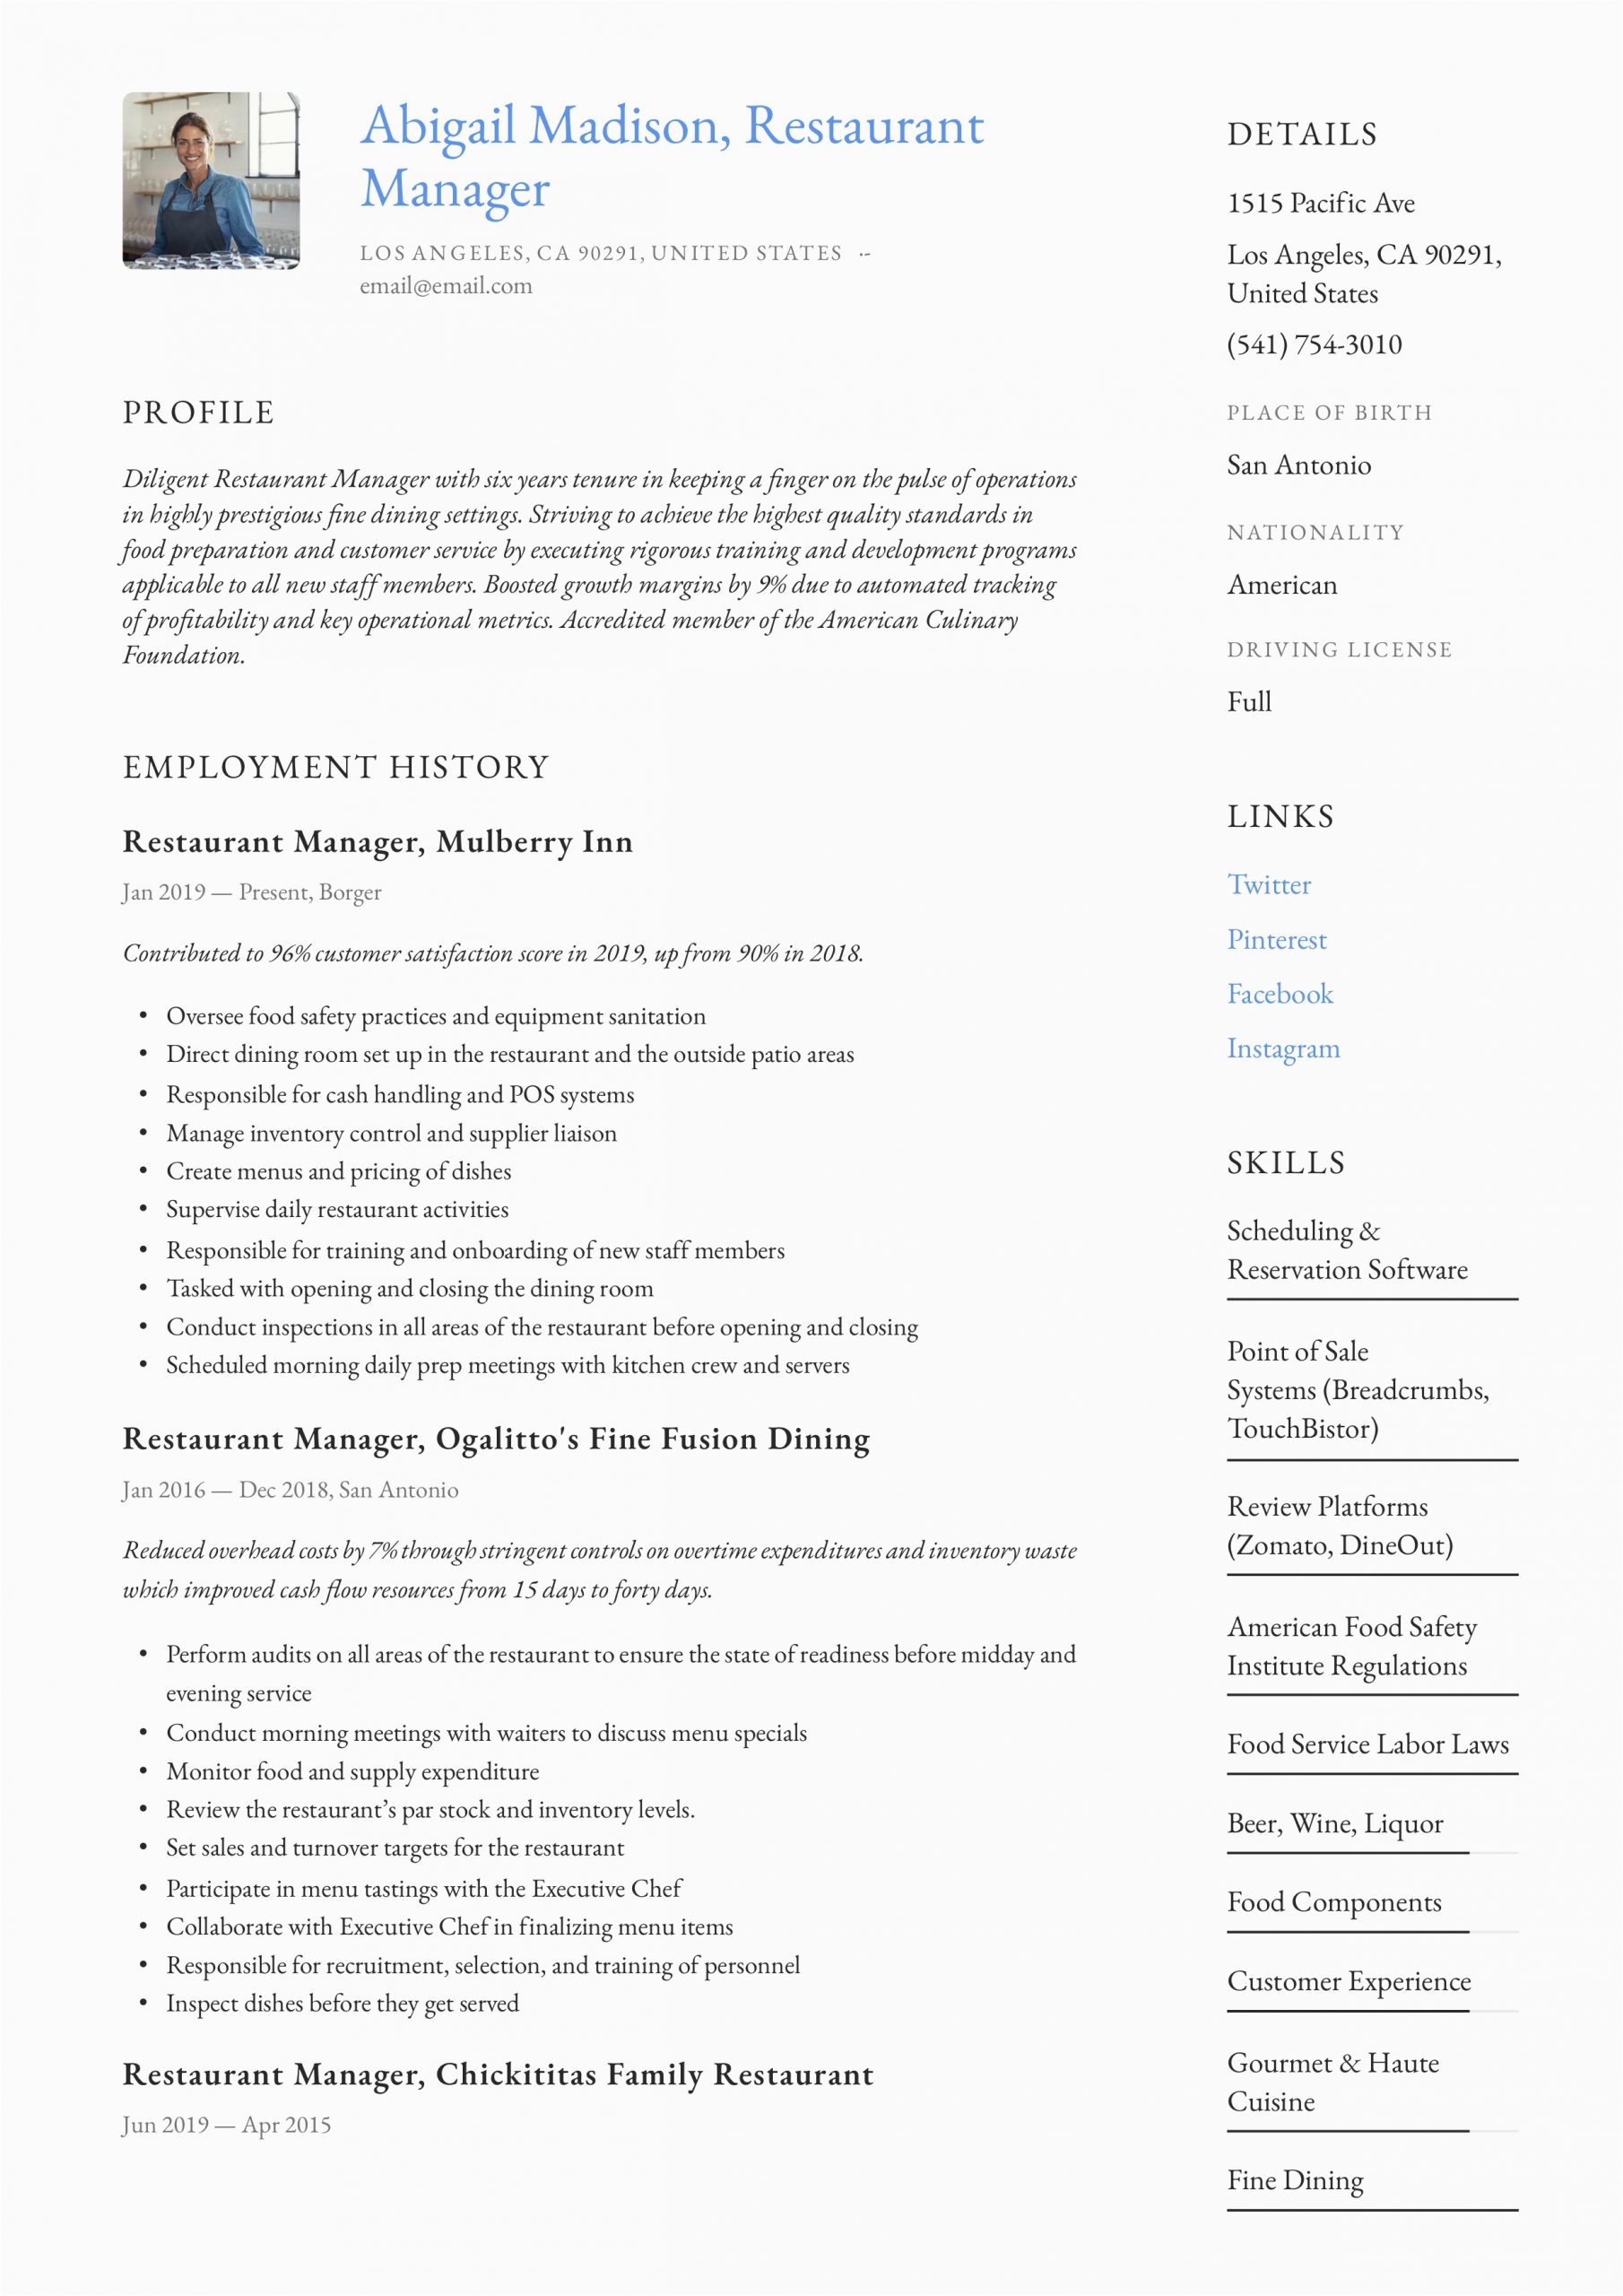 Sample Resume for Restaurant Manager Position Restaurant Manager Resume & Writing Guide